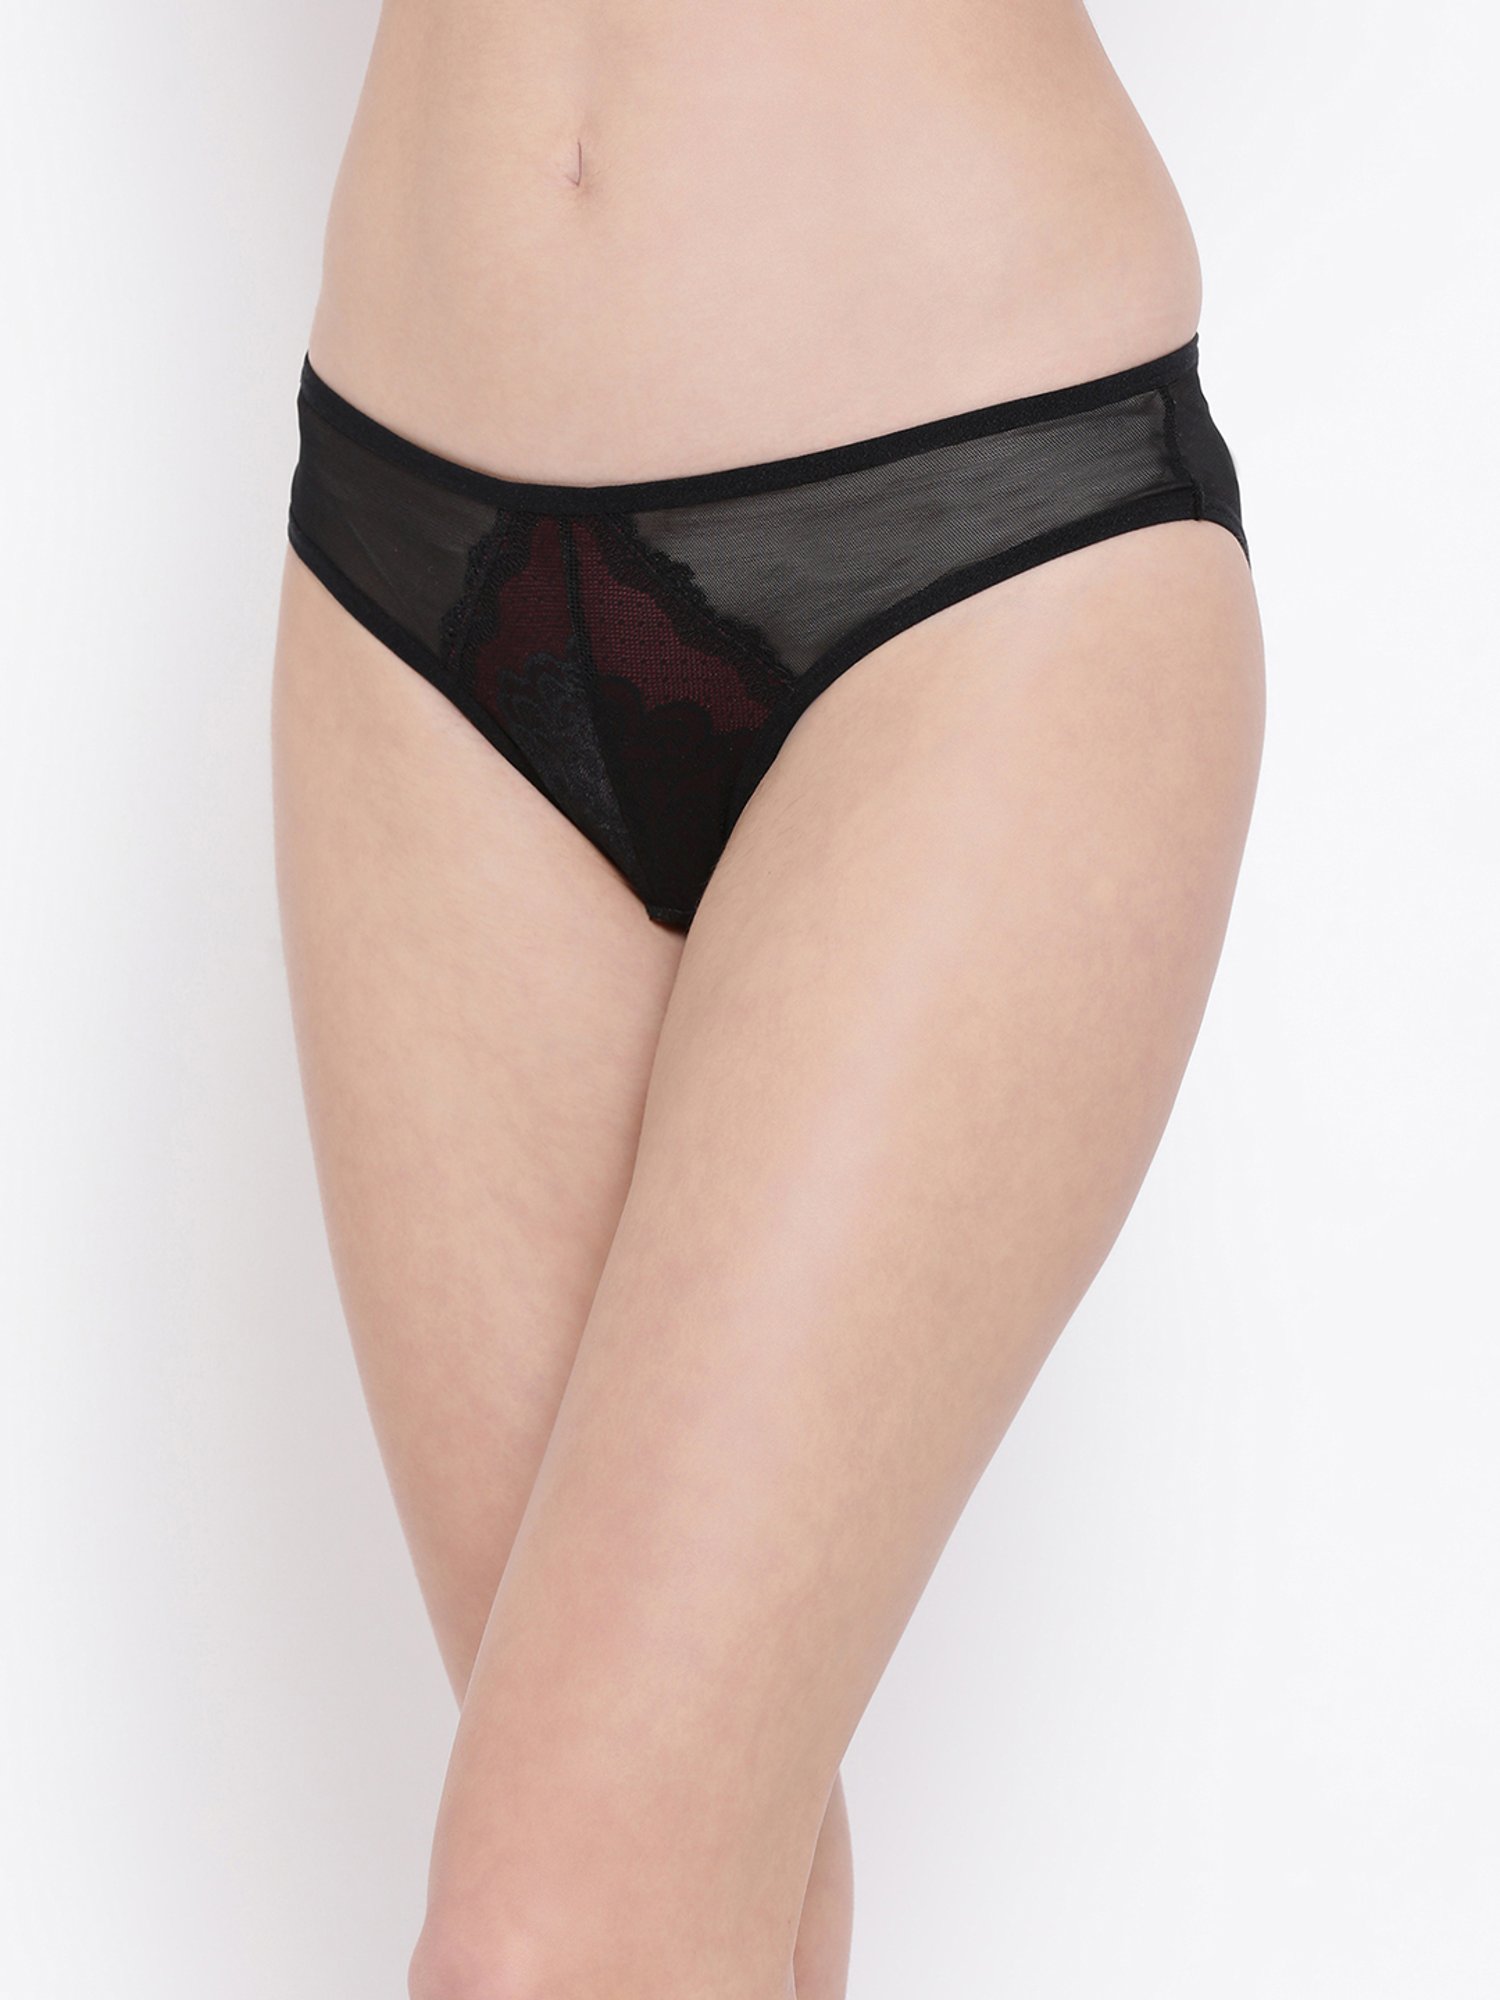 Buy Clovia Black Lace Bikini Panty for Women Online @ Tata CLiQ